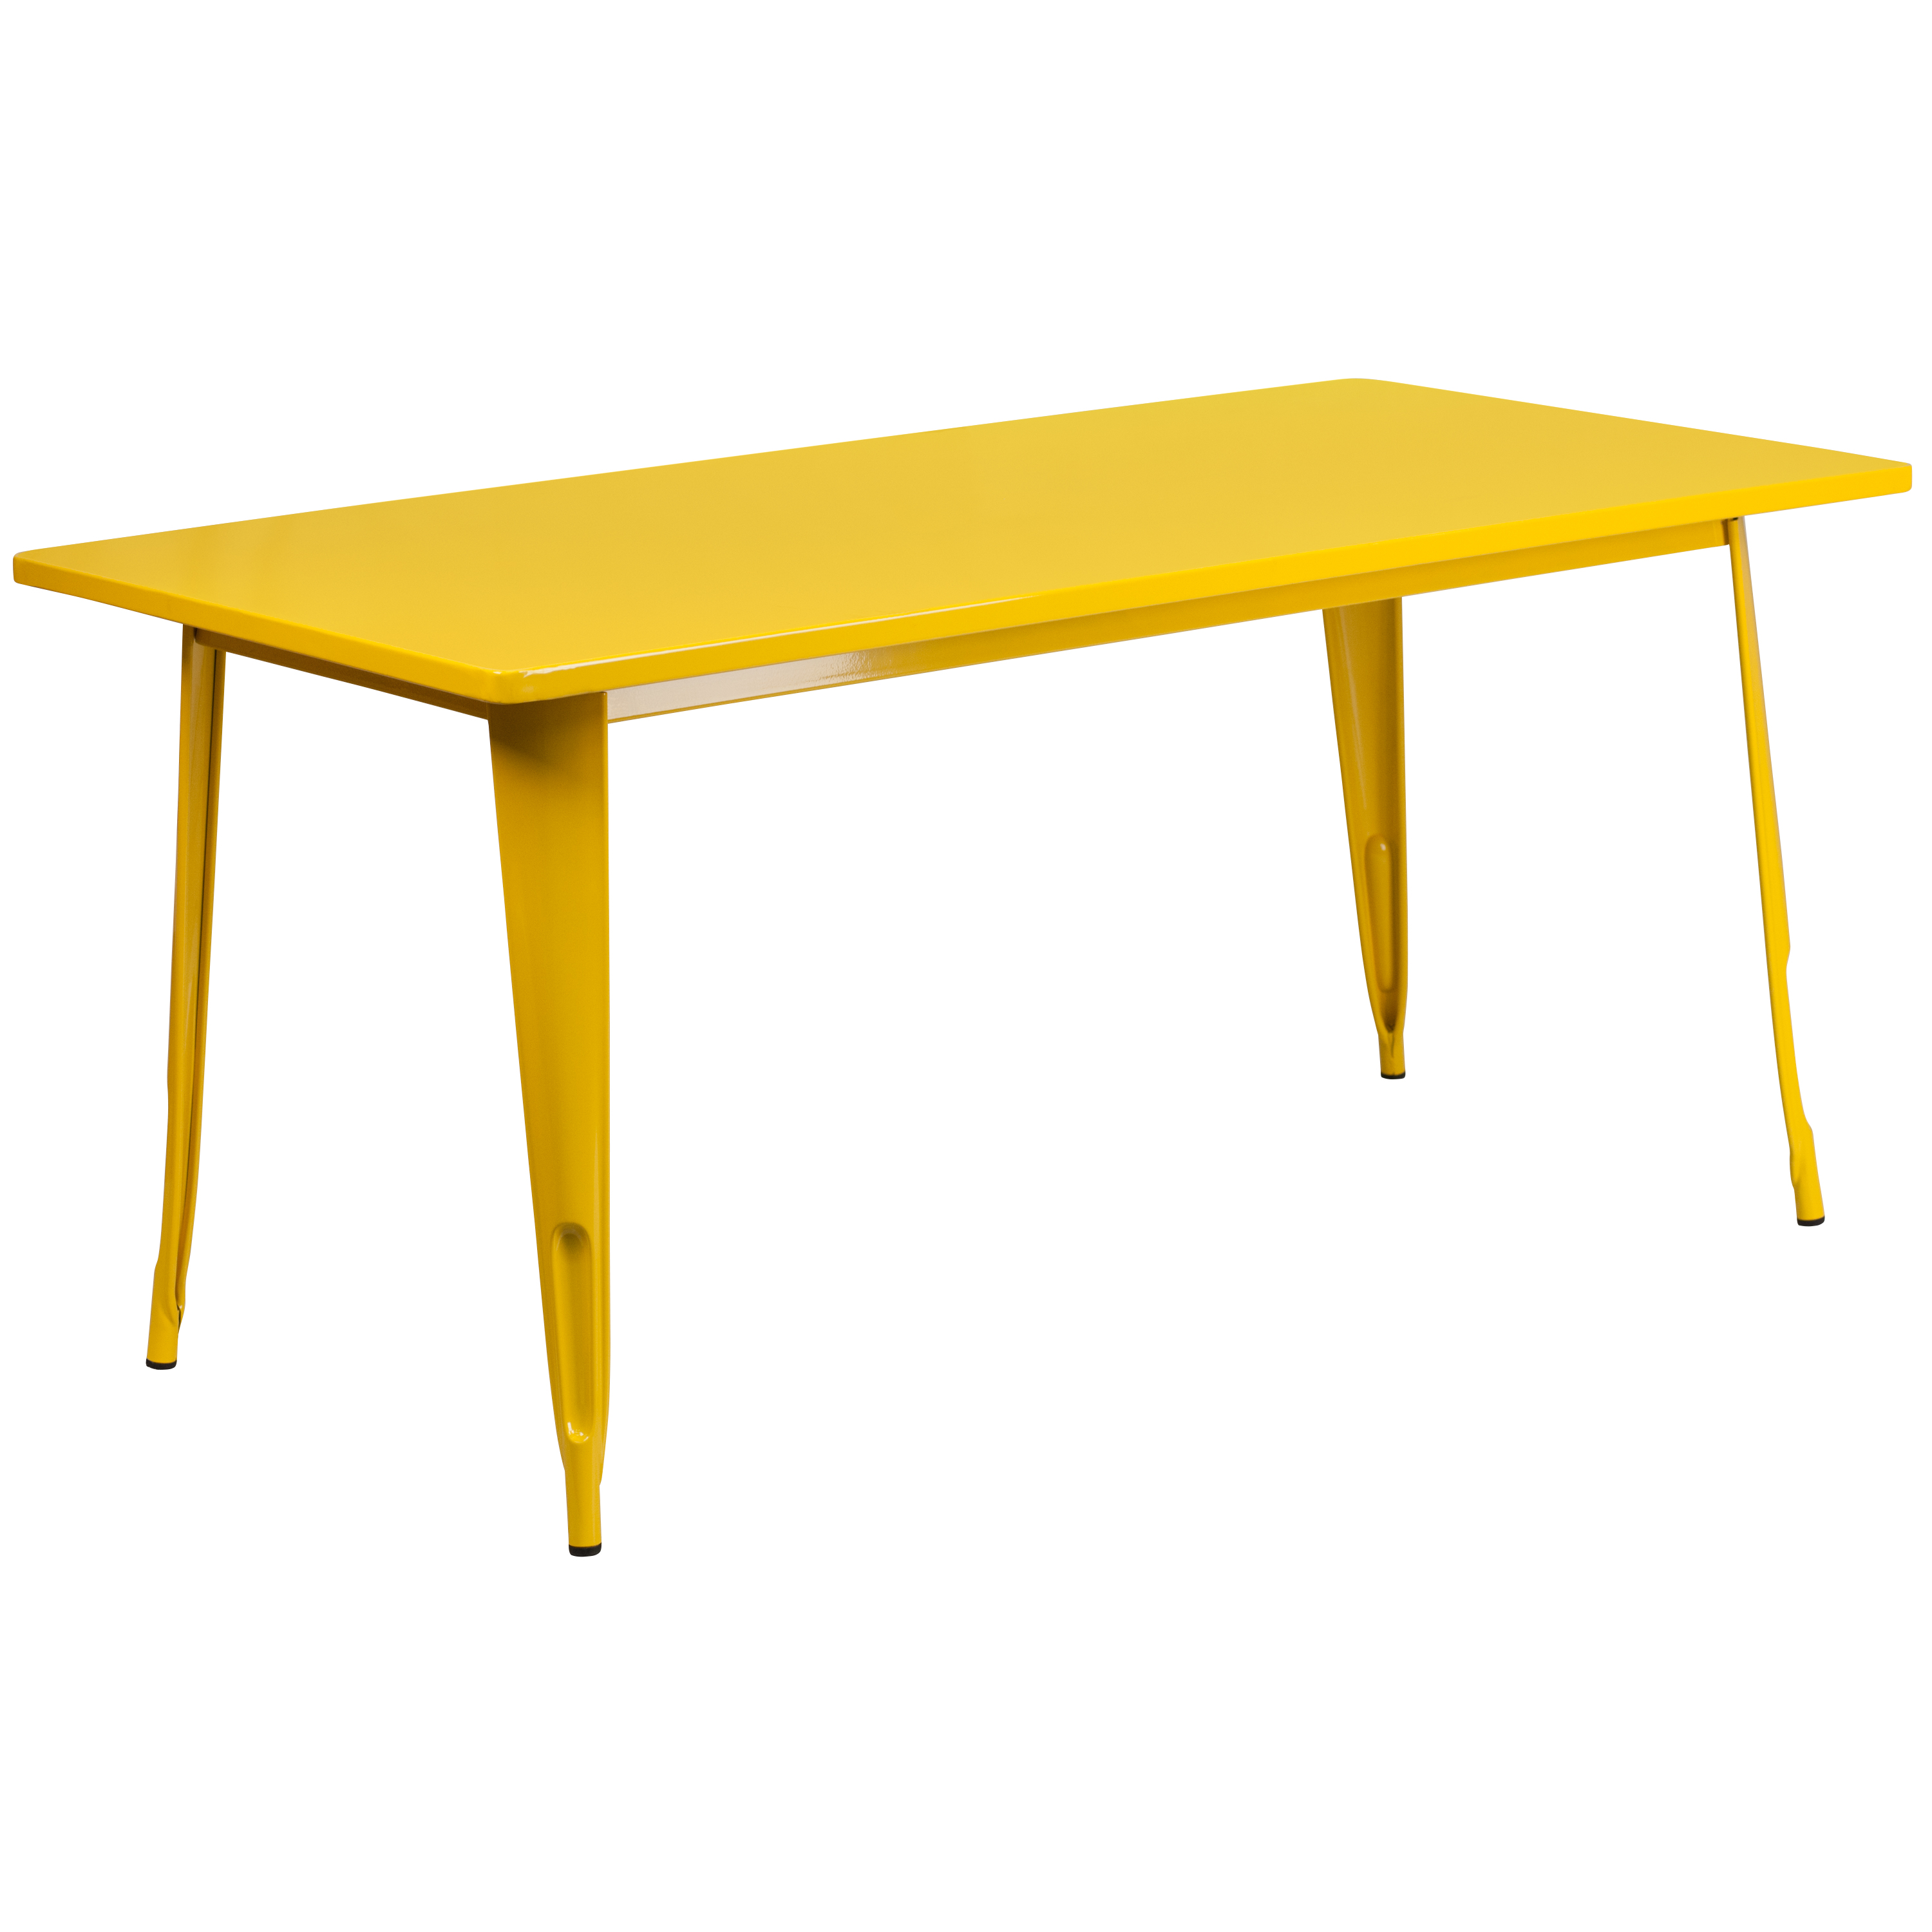 Flash Furniture Commercial Grade 31.5" x 63" Rectangular Yellow Metal Indoor-Outdoor Table - image 1 of 3